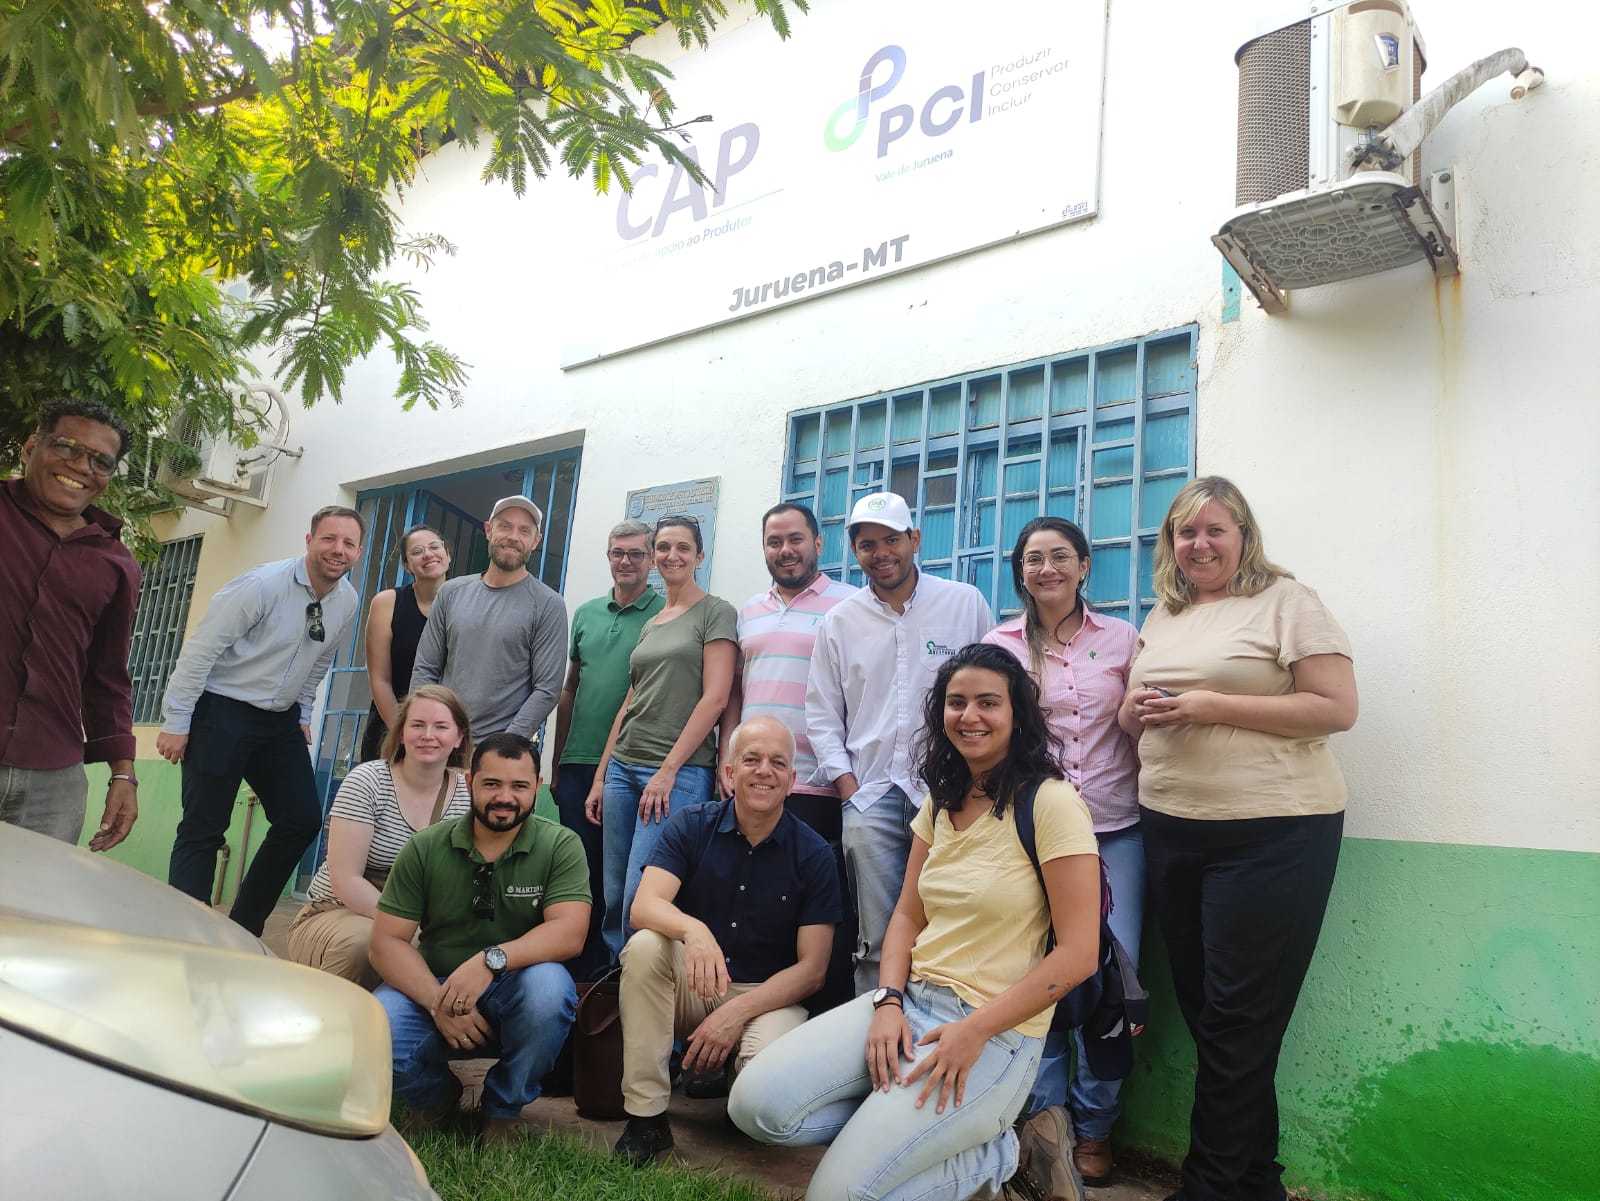 Delegation in front of the Producer Service Center, in Juruena,Mato Grosso, Brazil